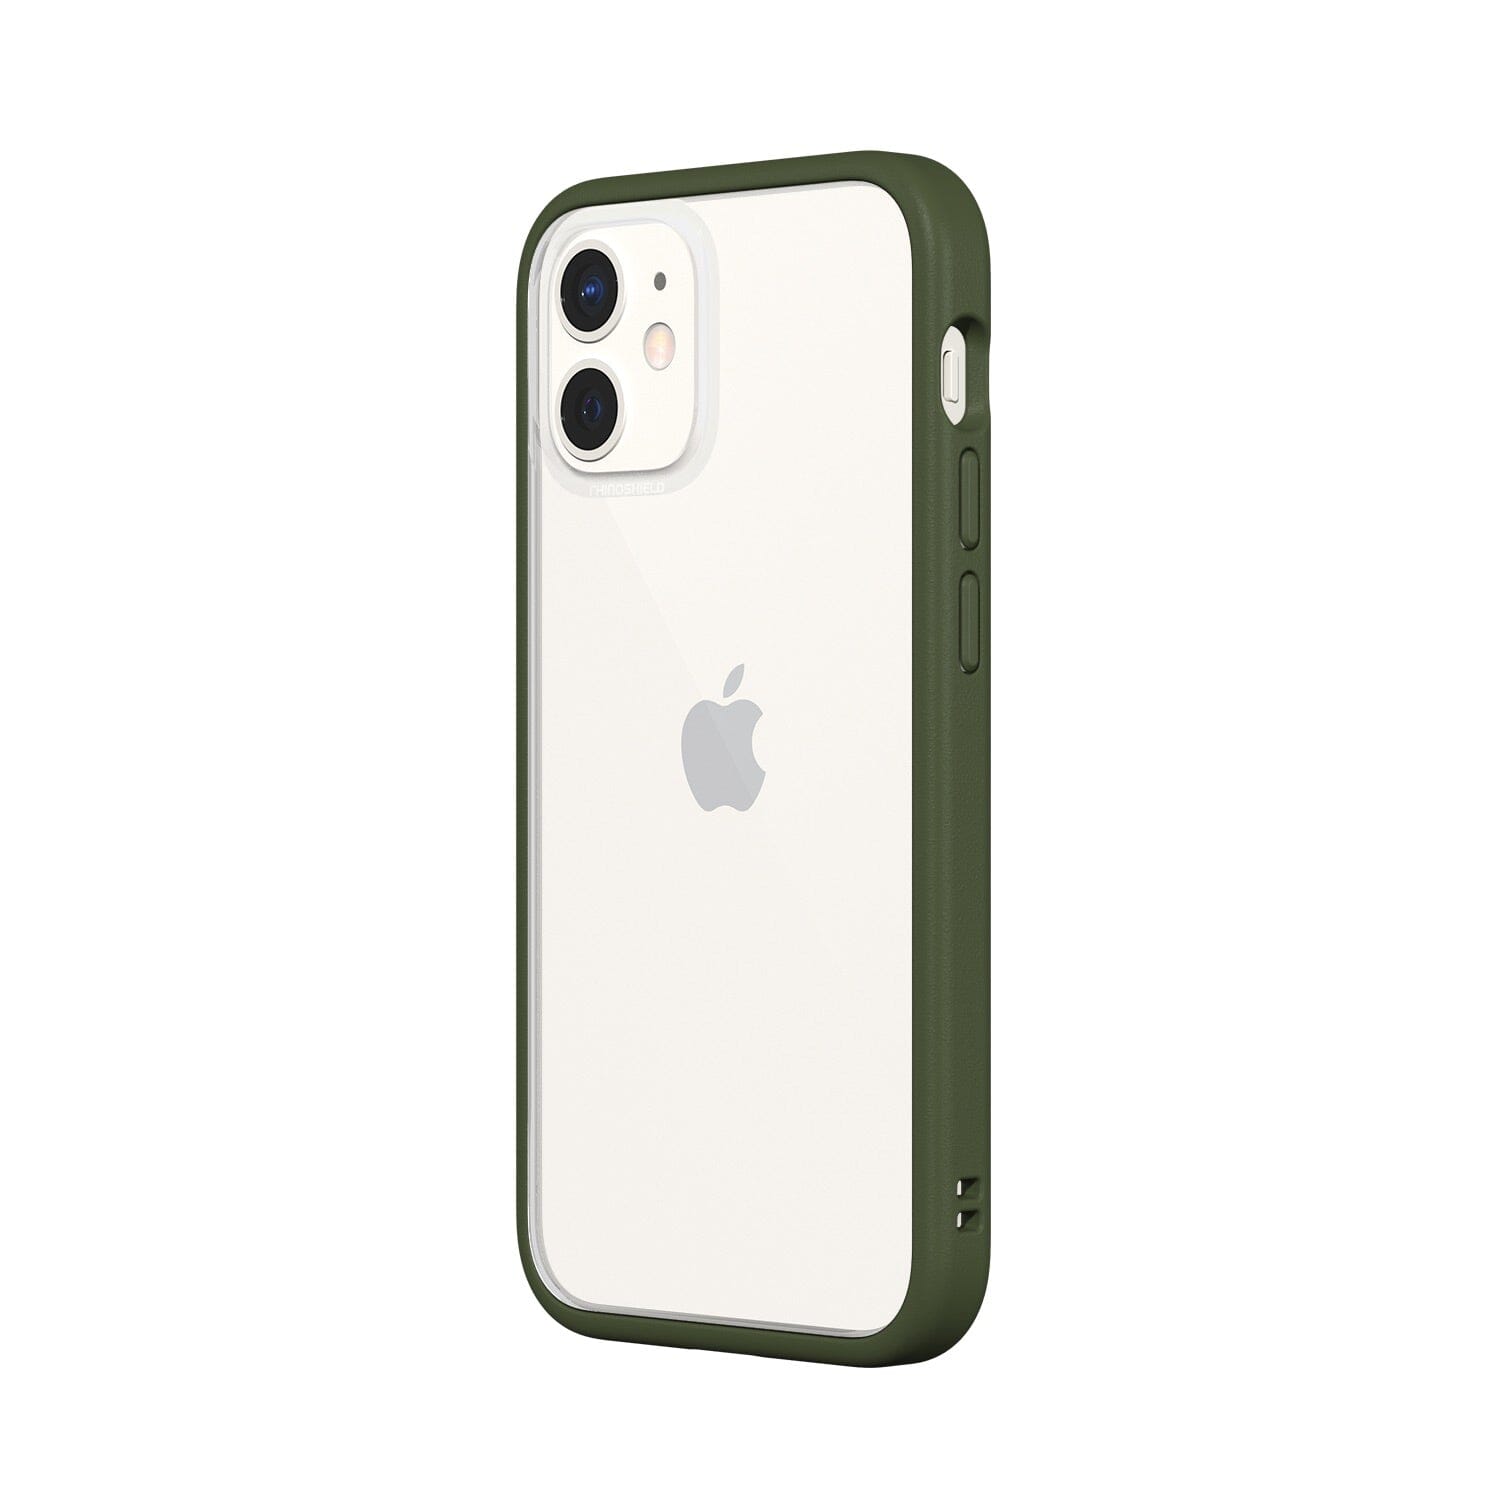 RhinoShield Mod NX Modular Case for iPhone 12 Series (2020) iPhone 12 Series RhinoShield iPhone 12 mini 5.4" Camo Green 